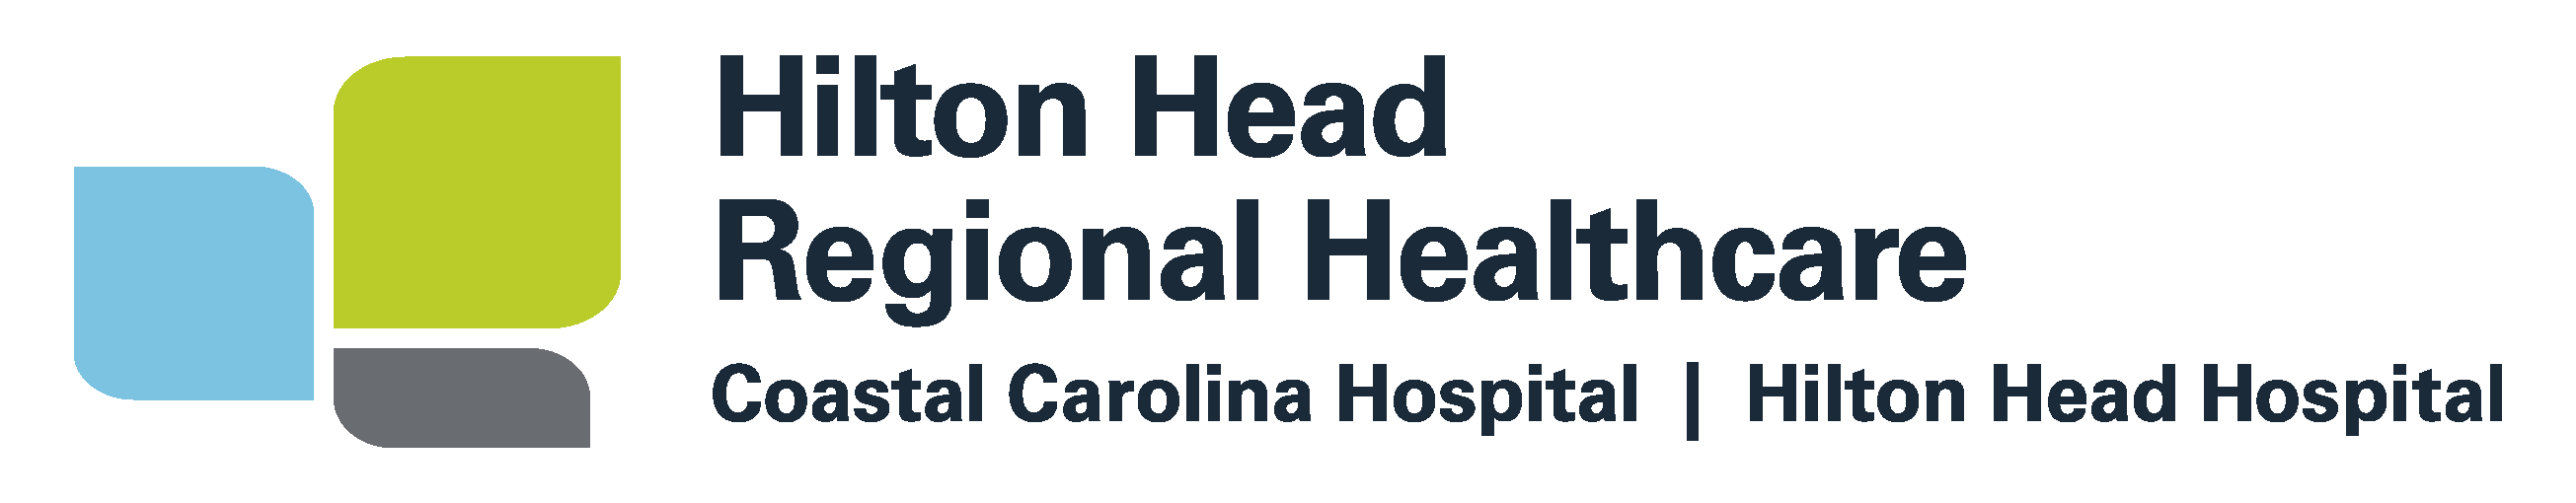 Hilton Heard Regional Healthcare